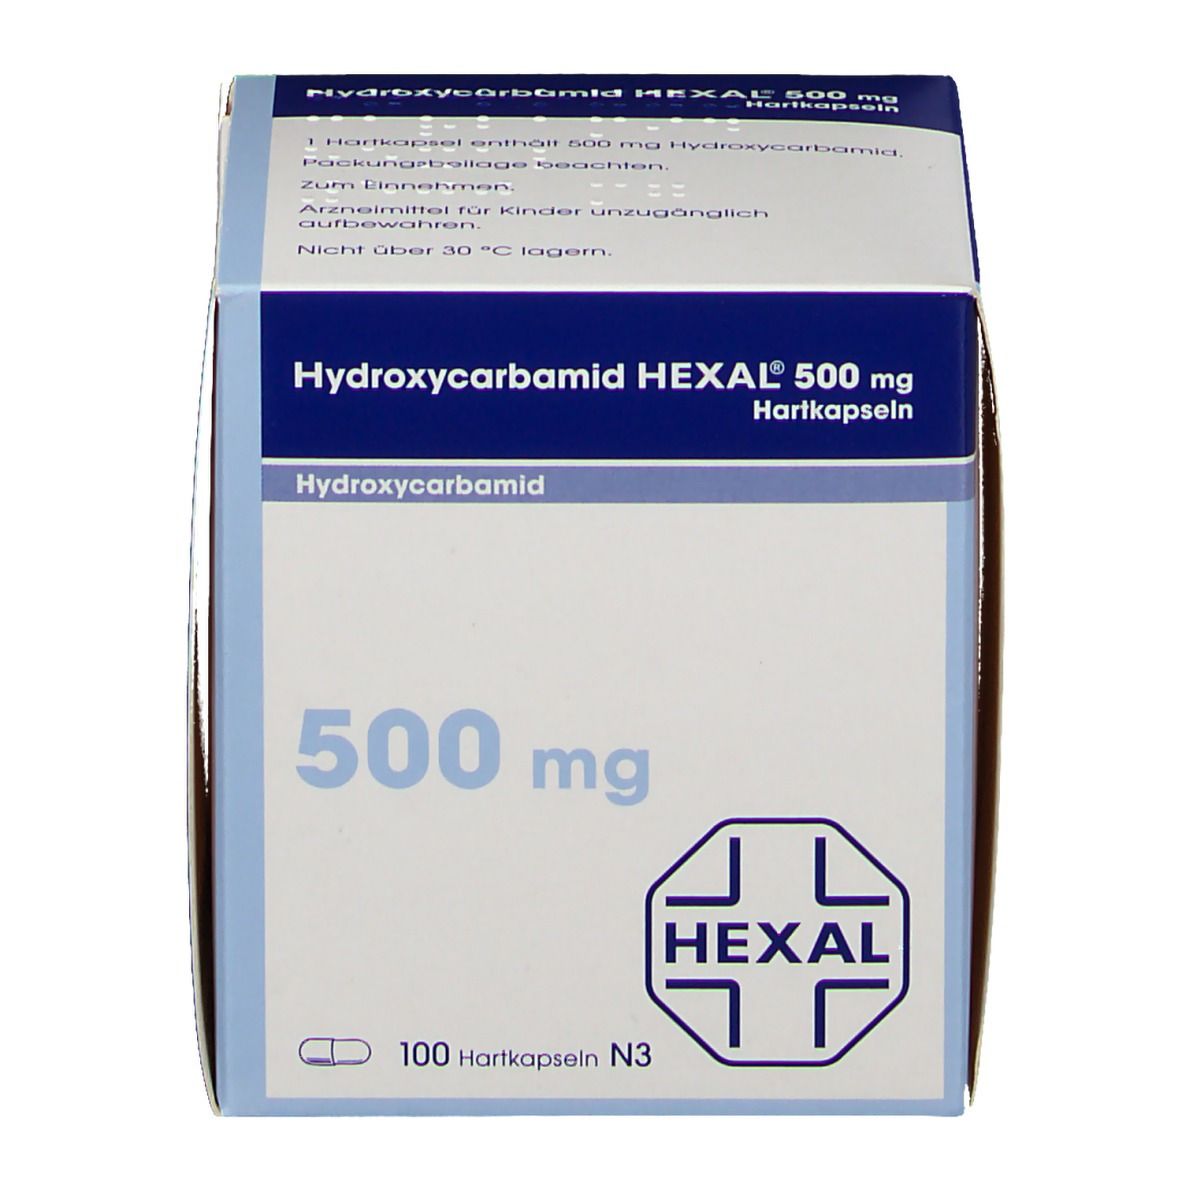 Hydroxycarbamid HEXAL® 500 mg